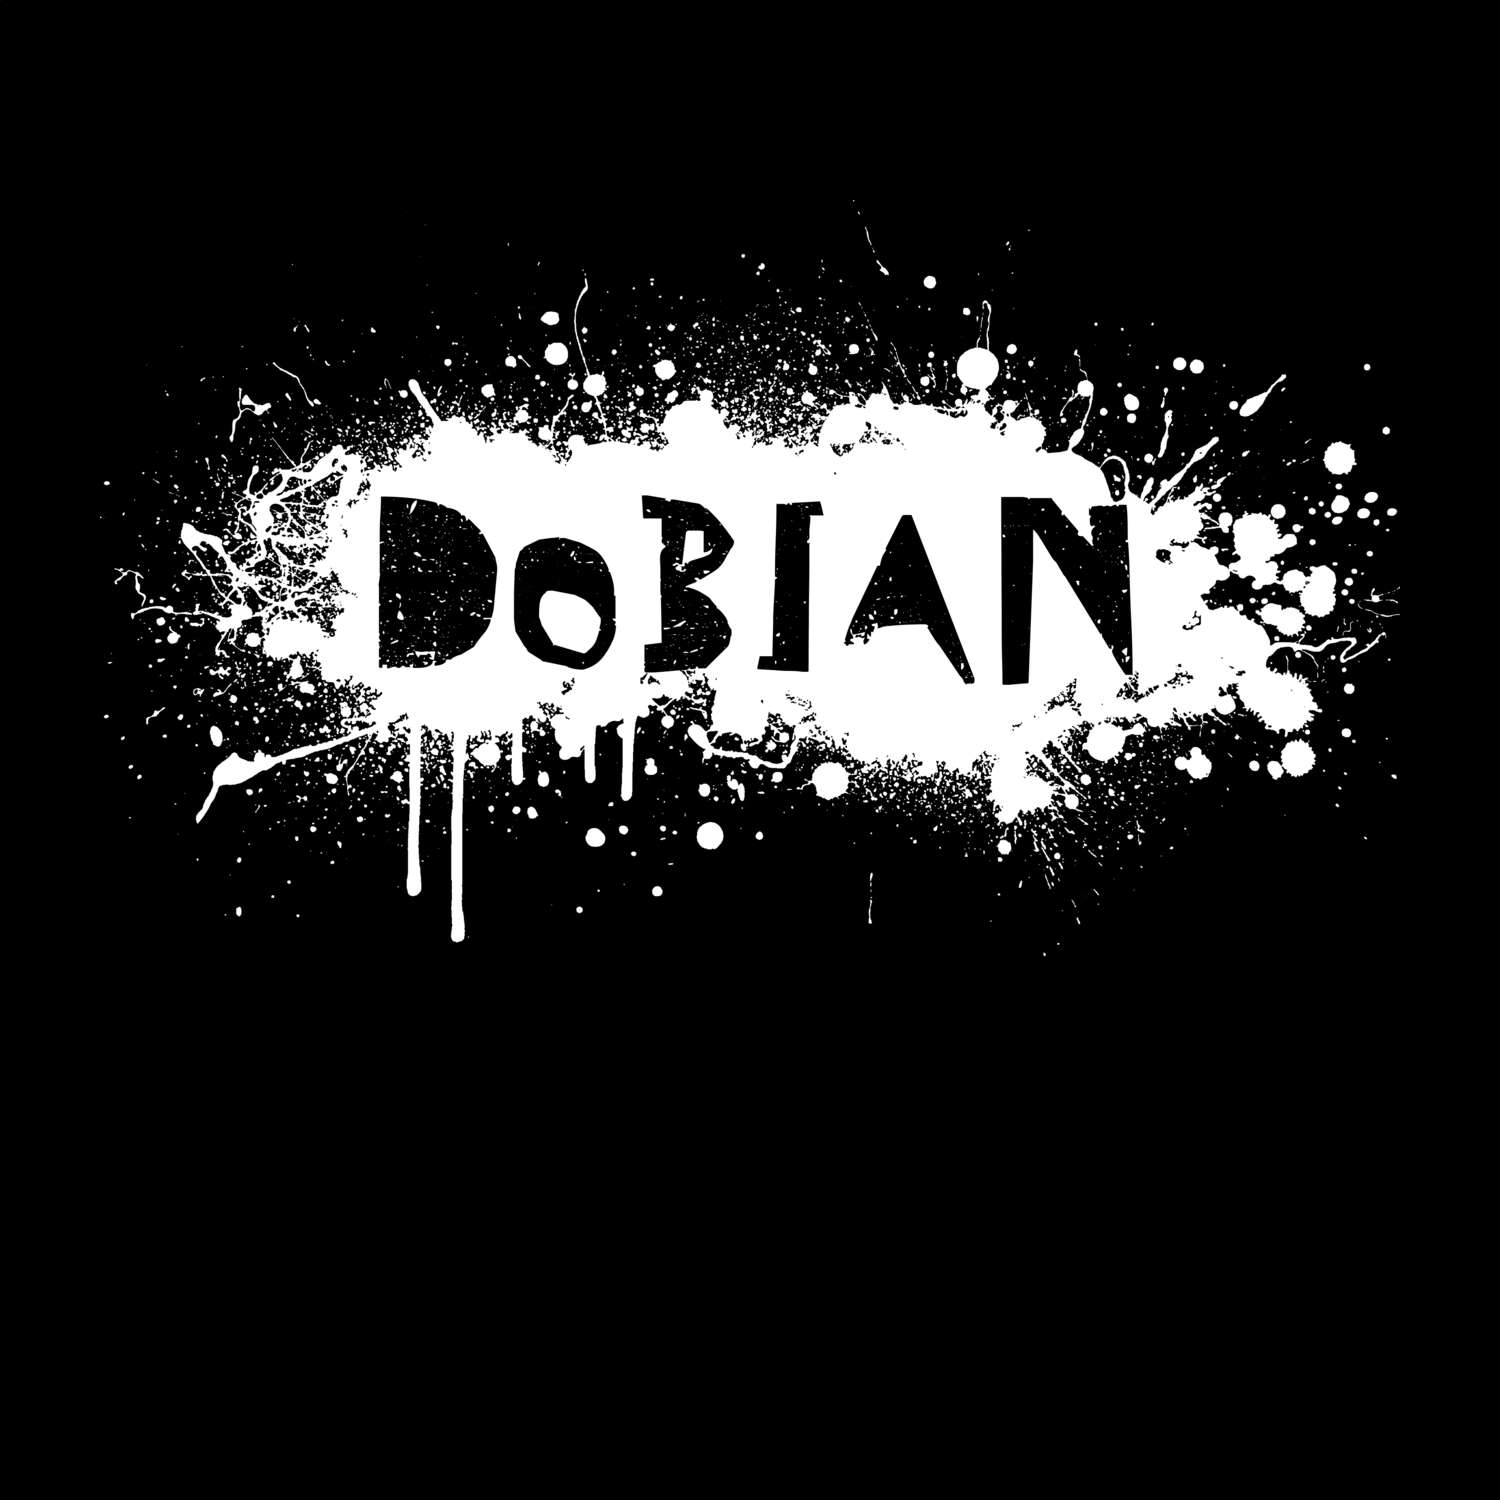 Dobian T-Shirt »Paint Splash Punk«